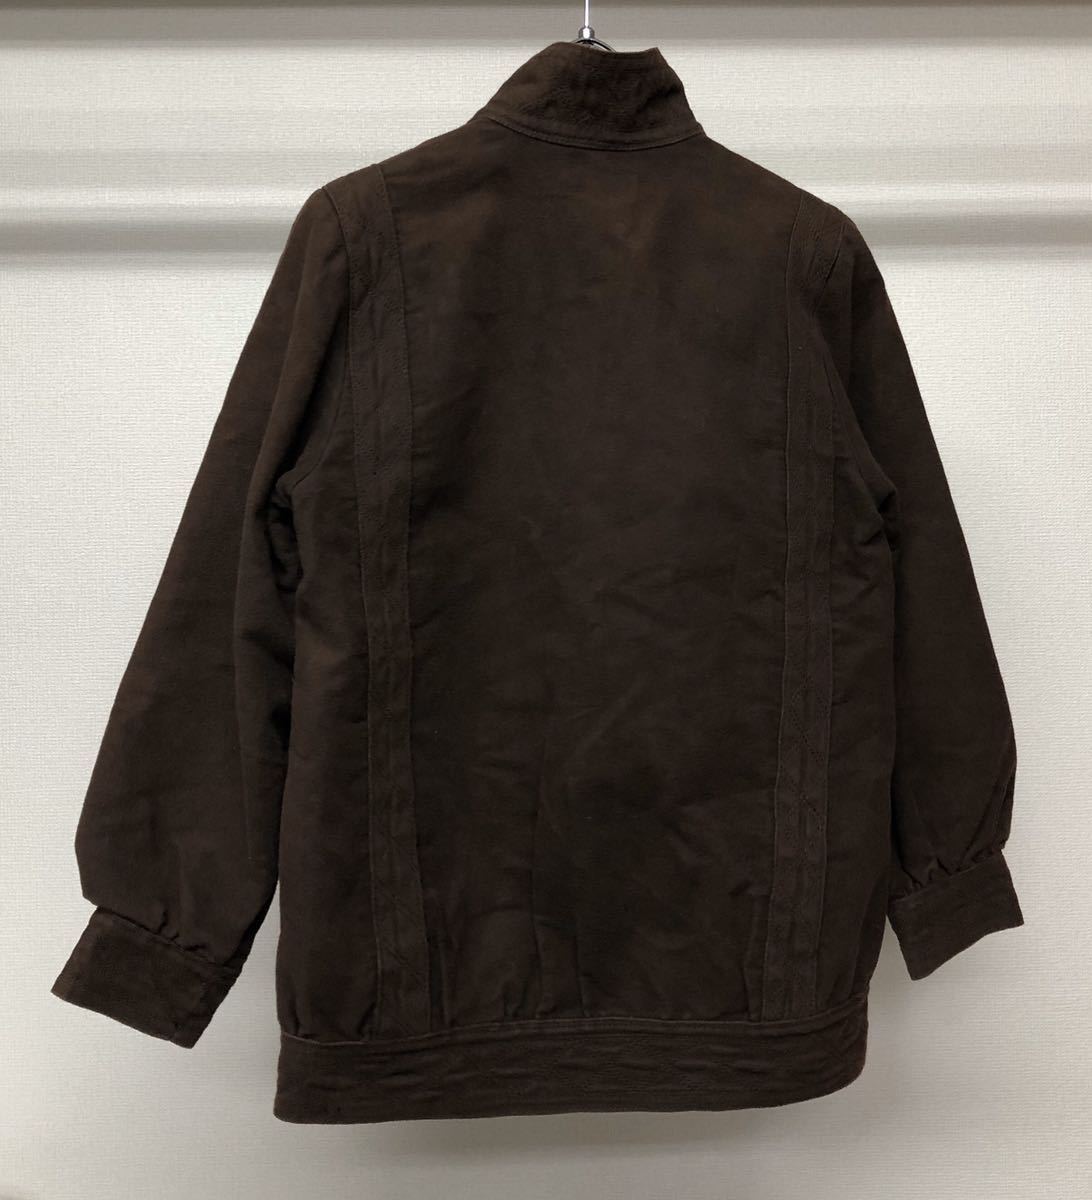 70s FENDI BUTTON UP JACKET Fendi Vintage jacket France made 